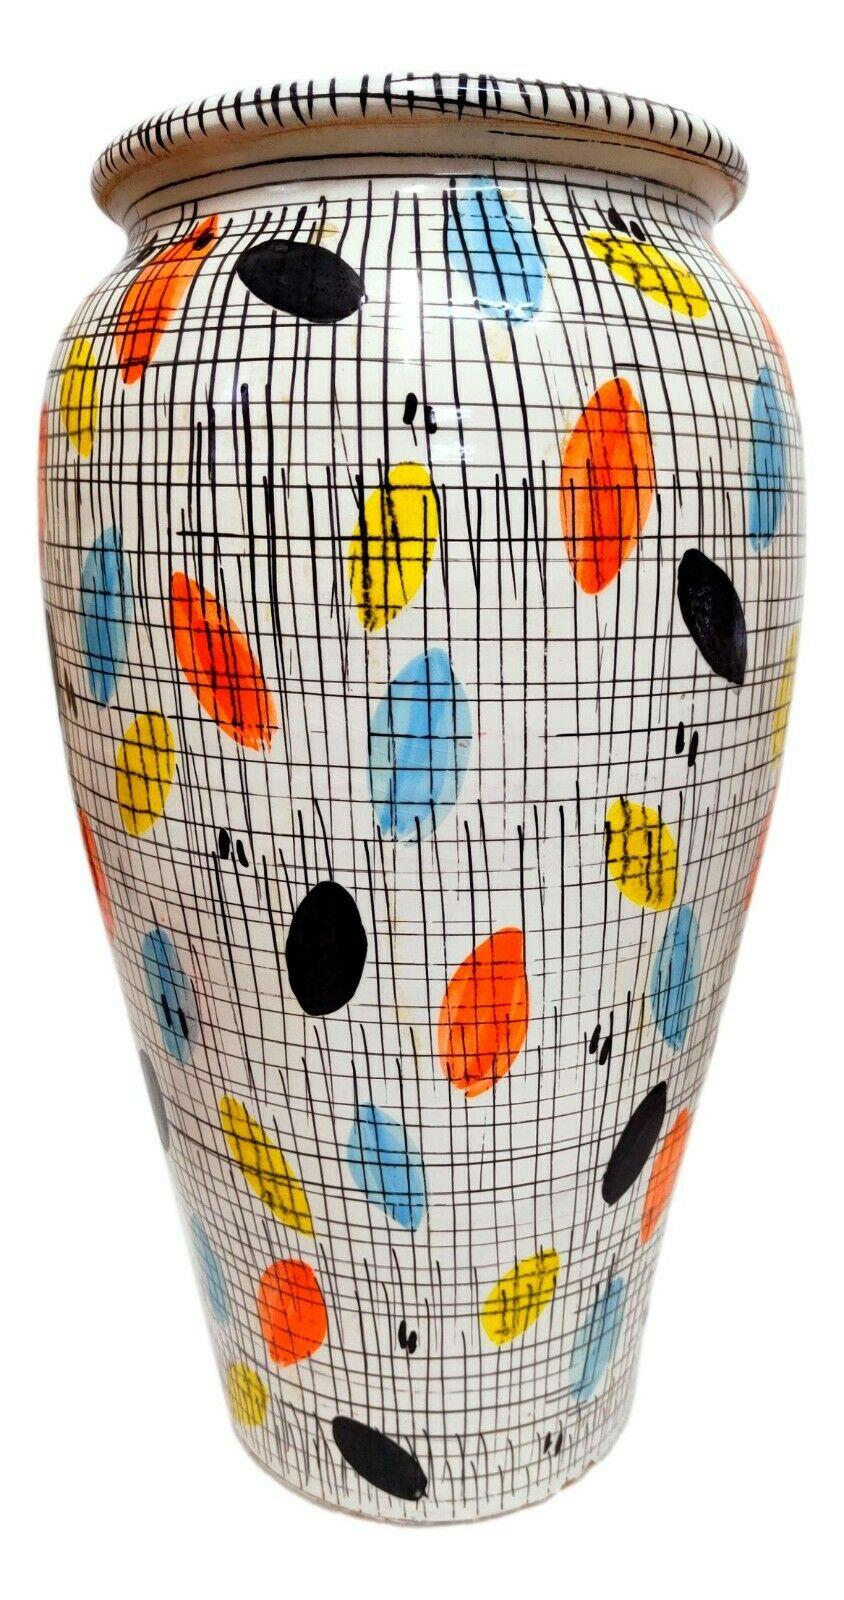 Late 20th Century Large Polychrome Ceramic Vase, Italian Design, 1970s